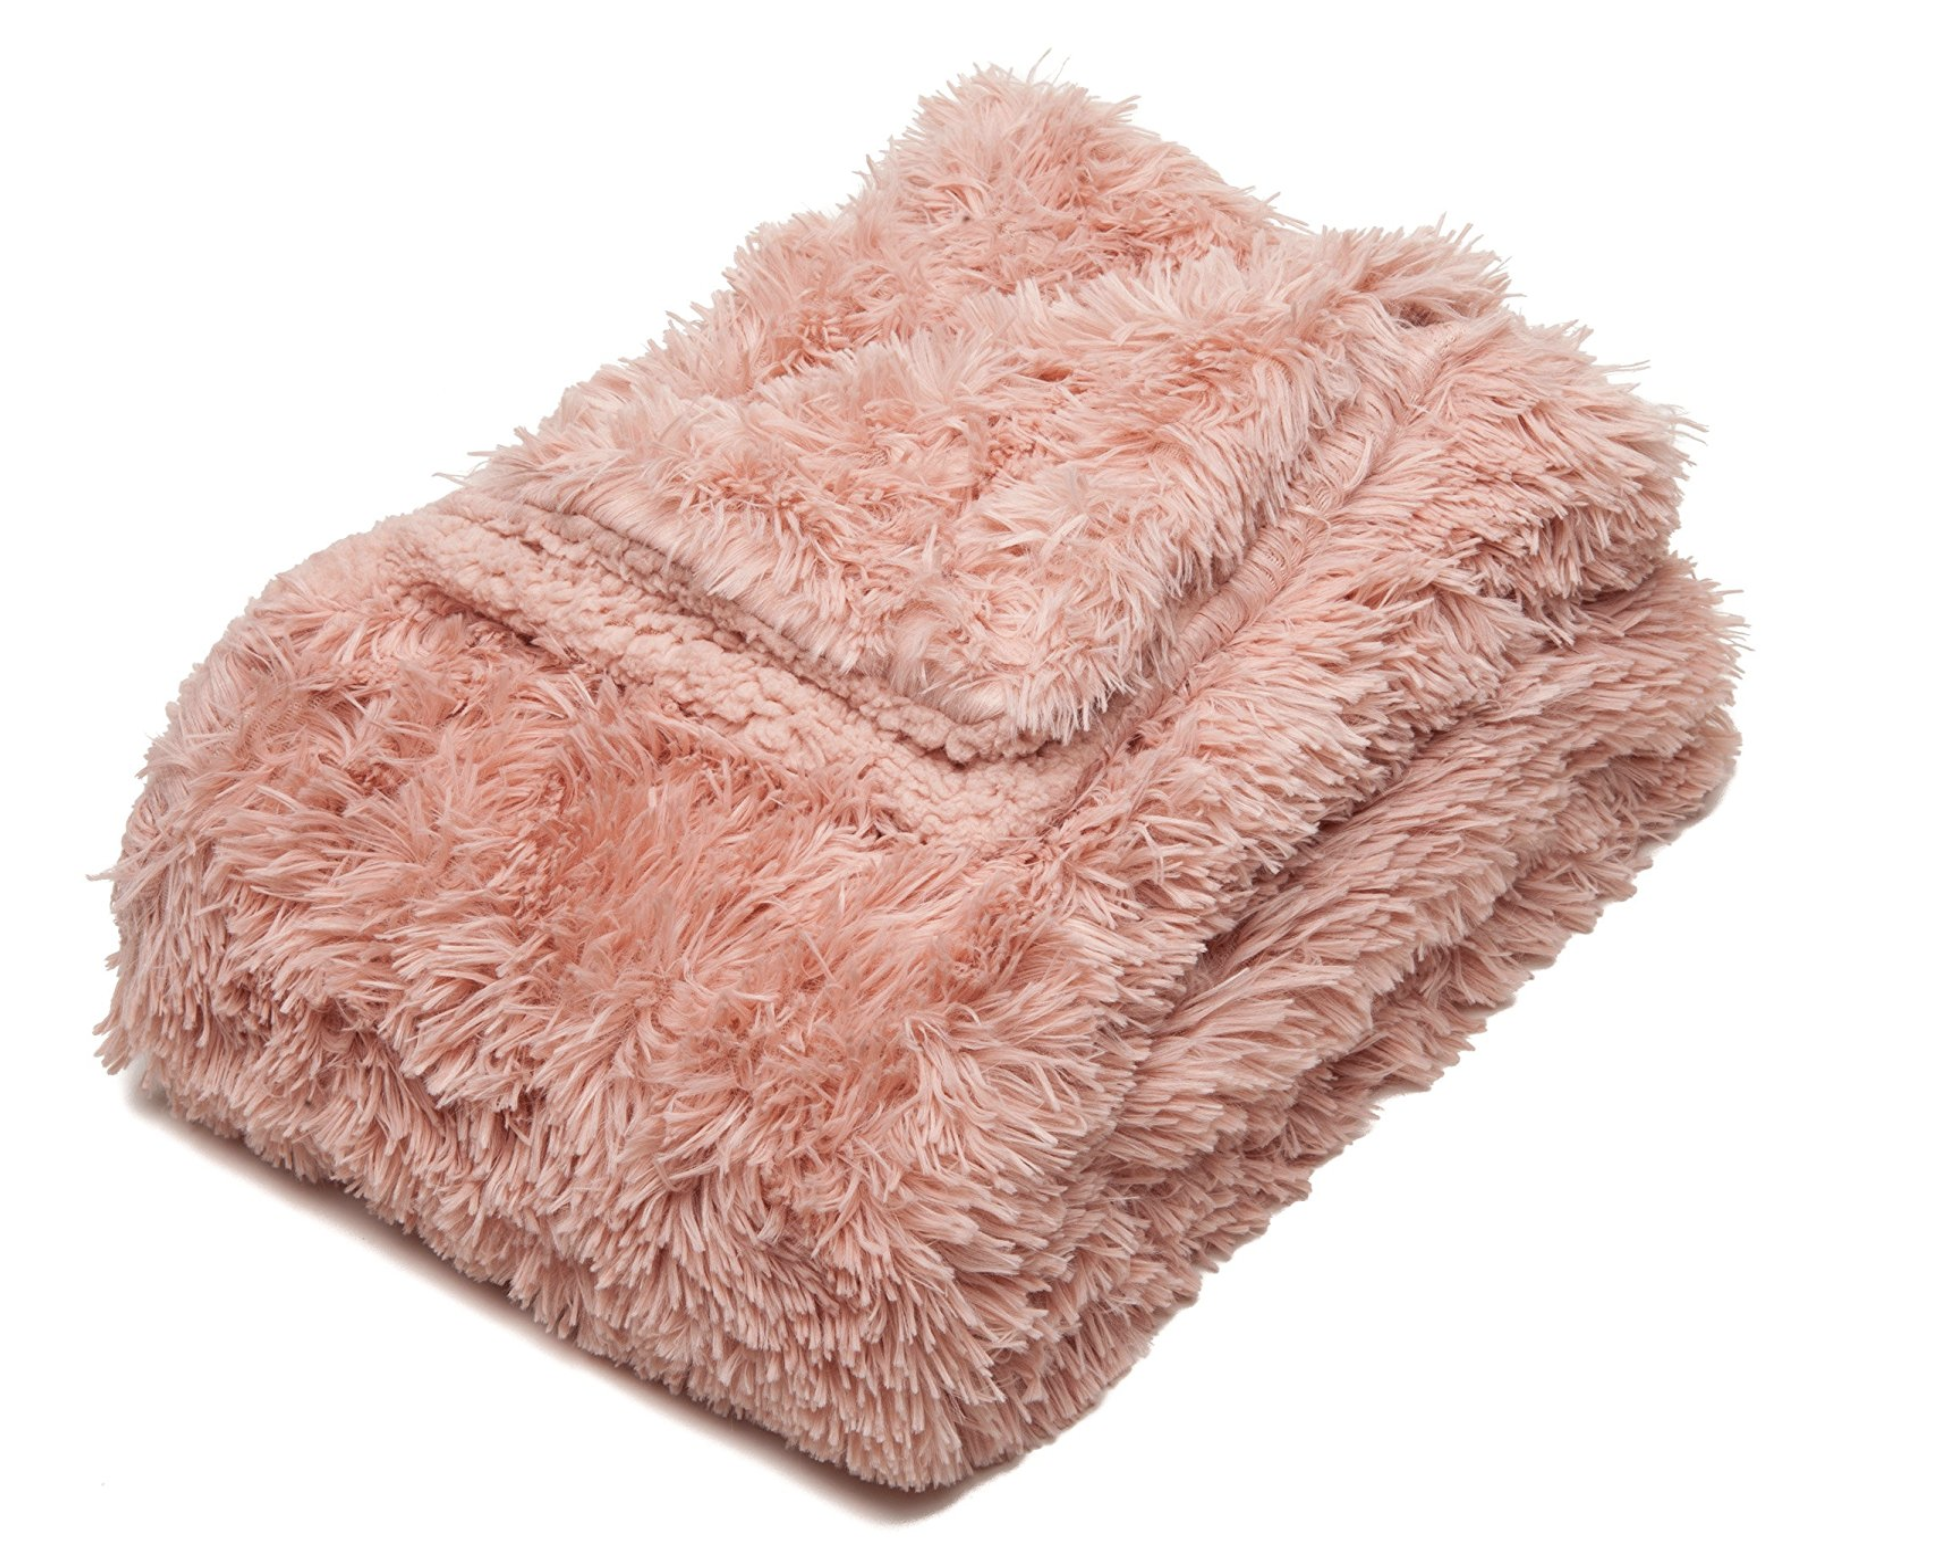 Sherpa Furry Blanket in Peach